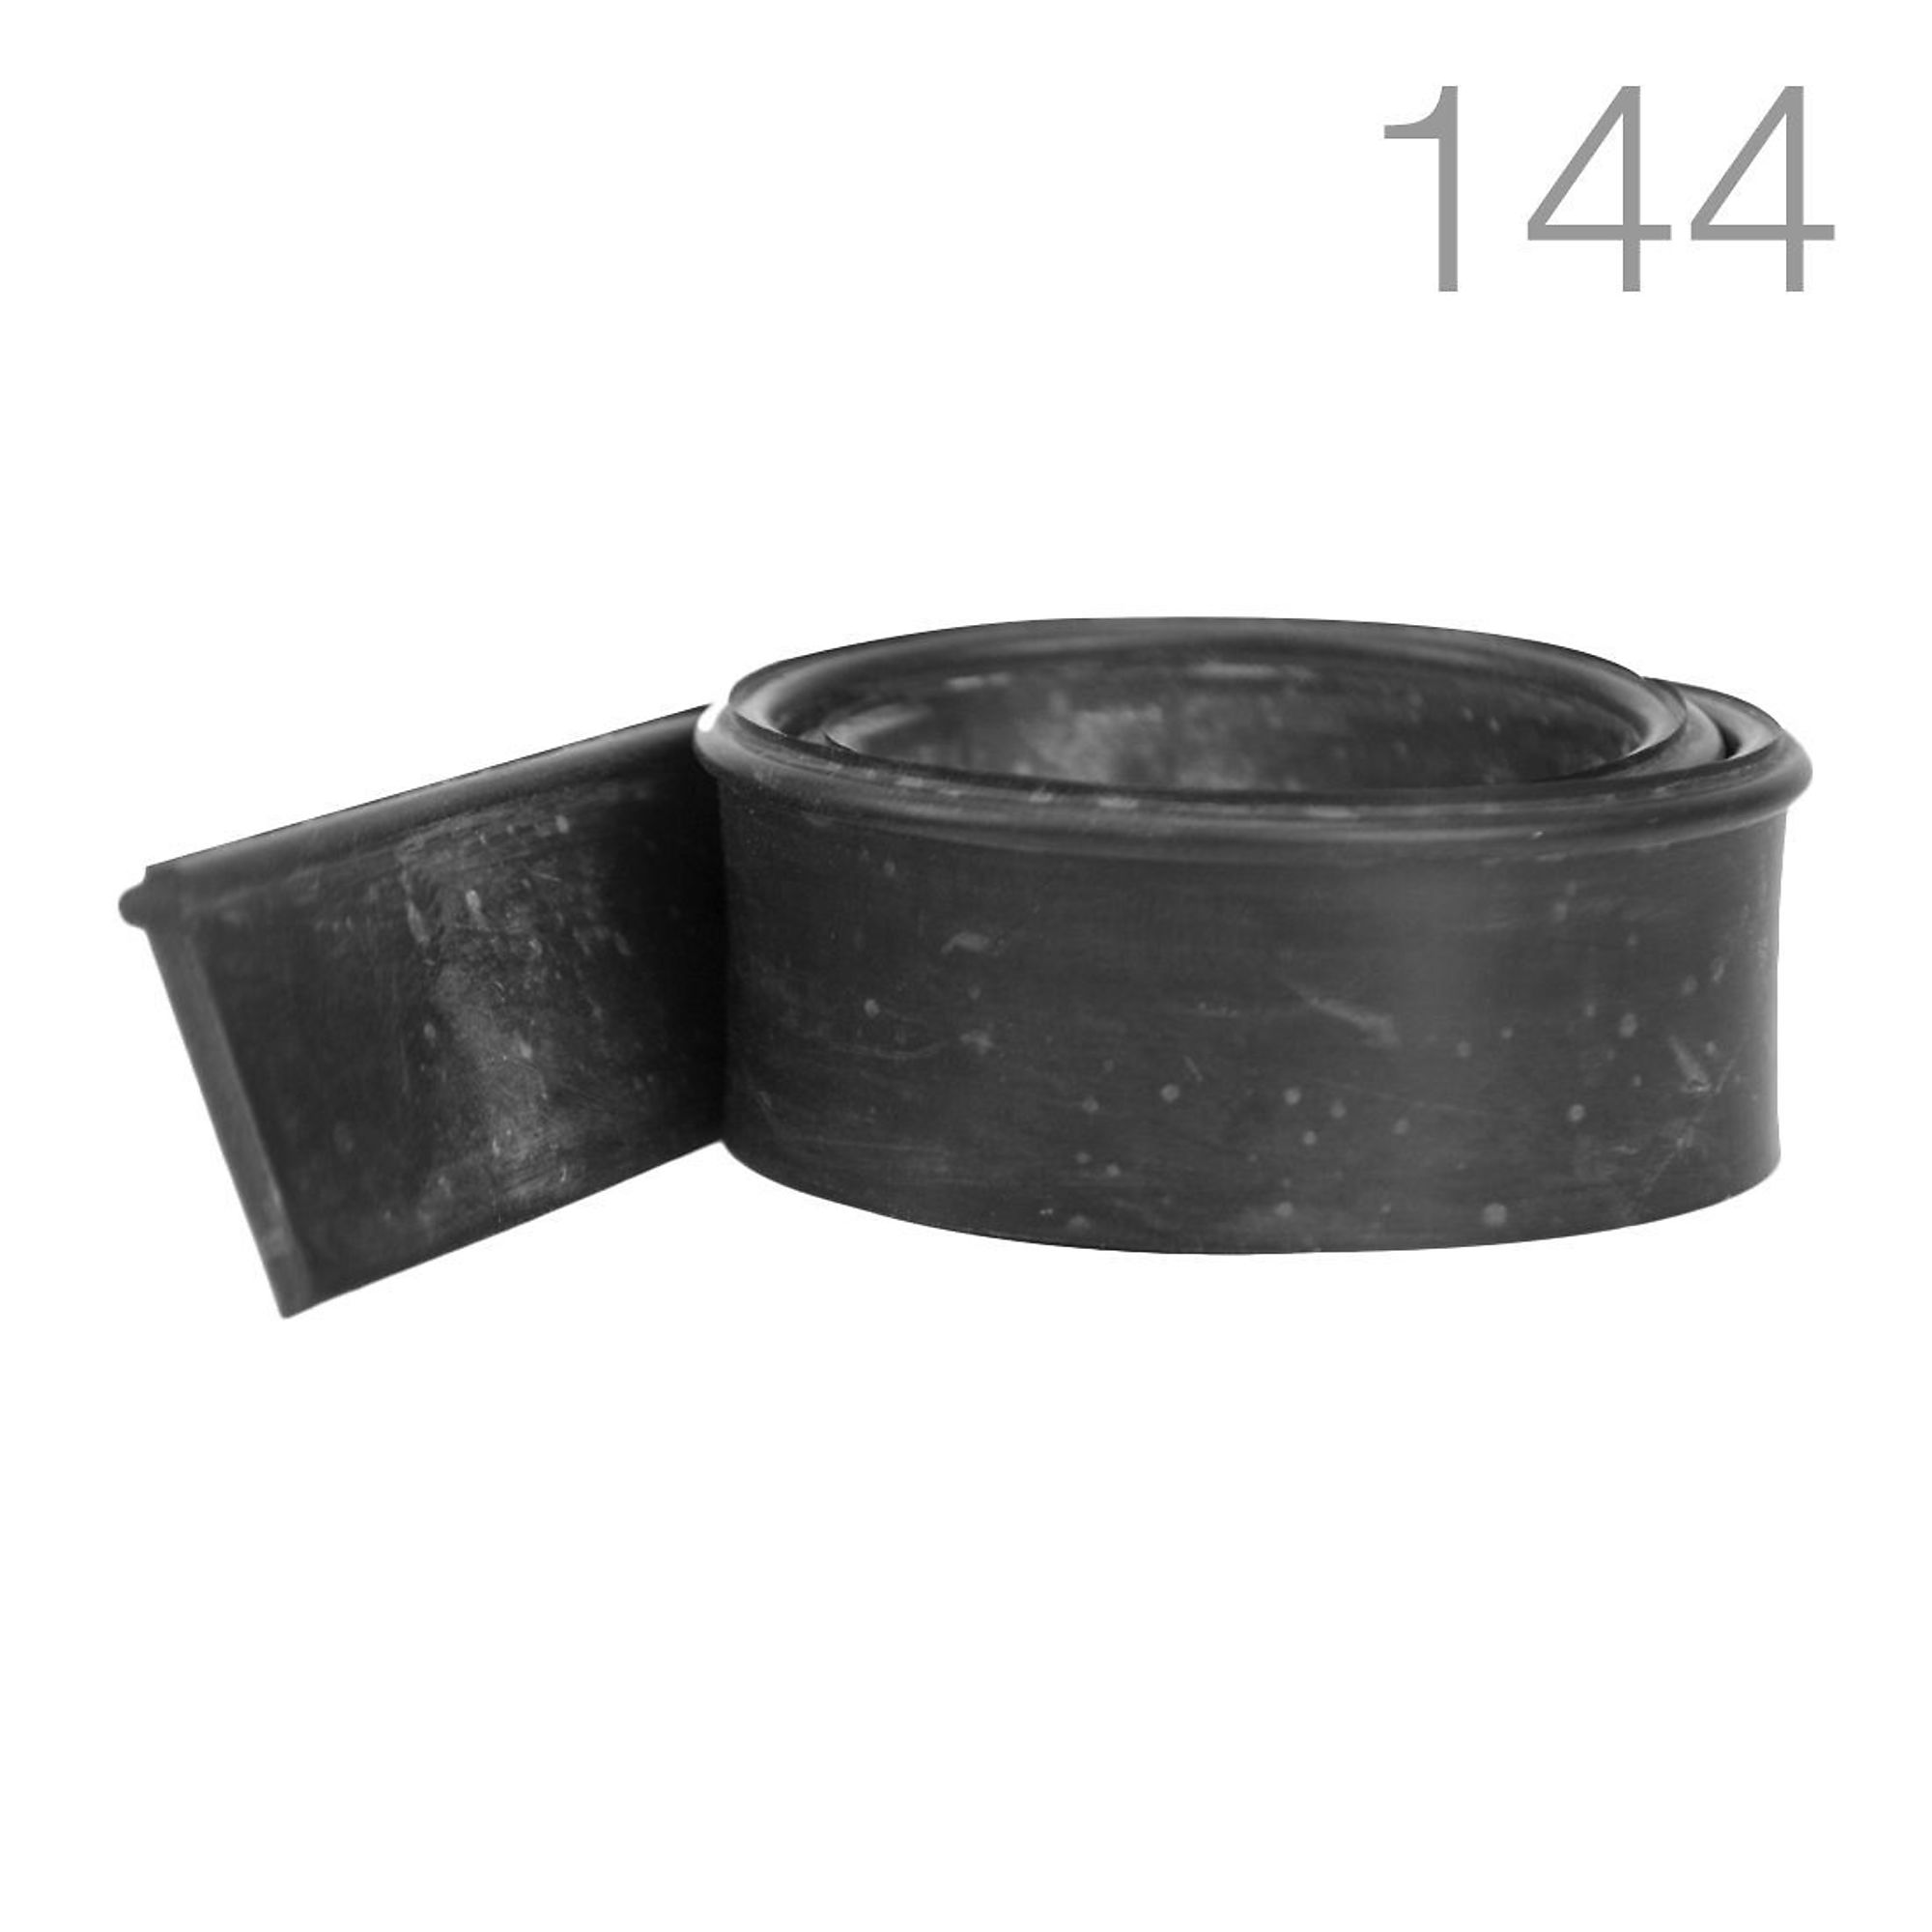 BlackDiamond, Flat Top Soft Squeegee Rubber Gross - 12Inch, Model 012-05-172